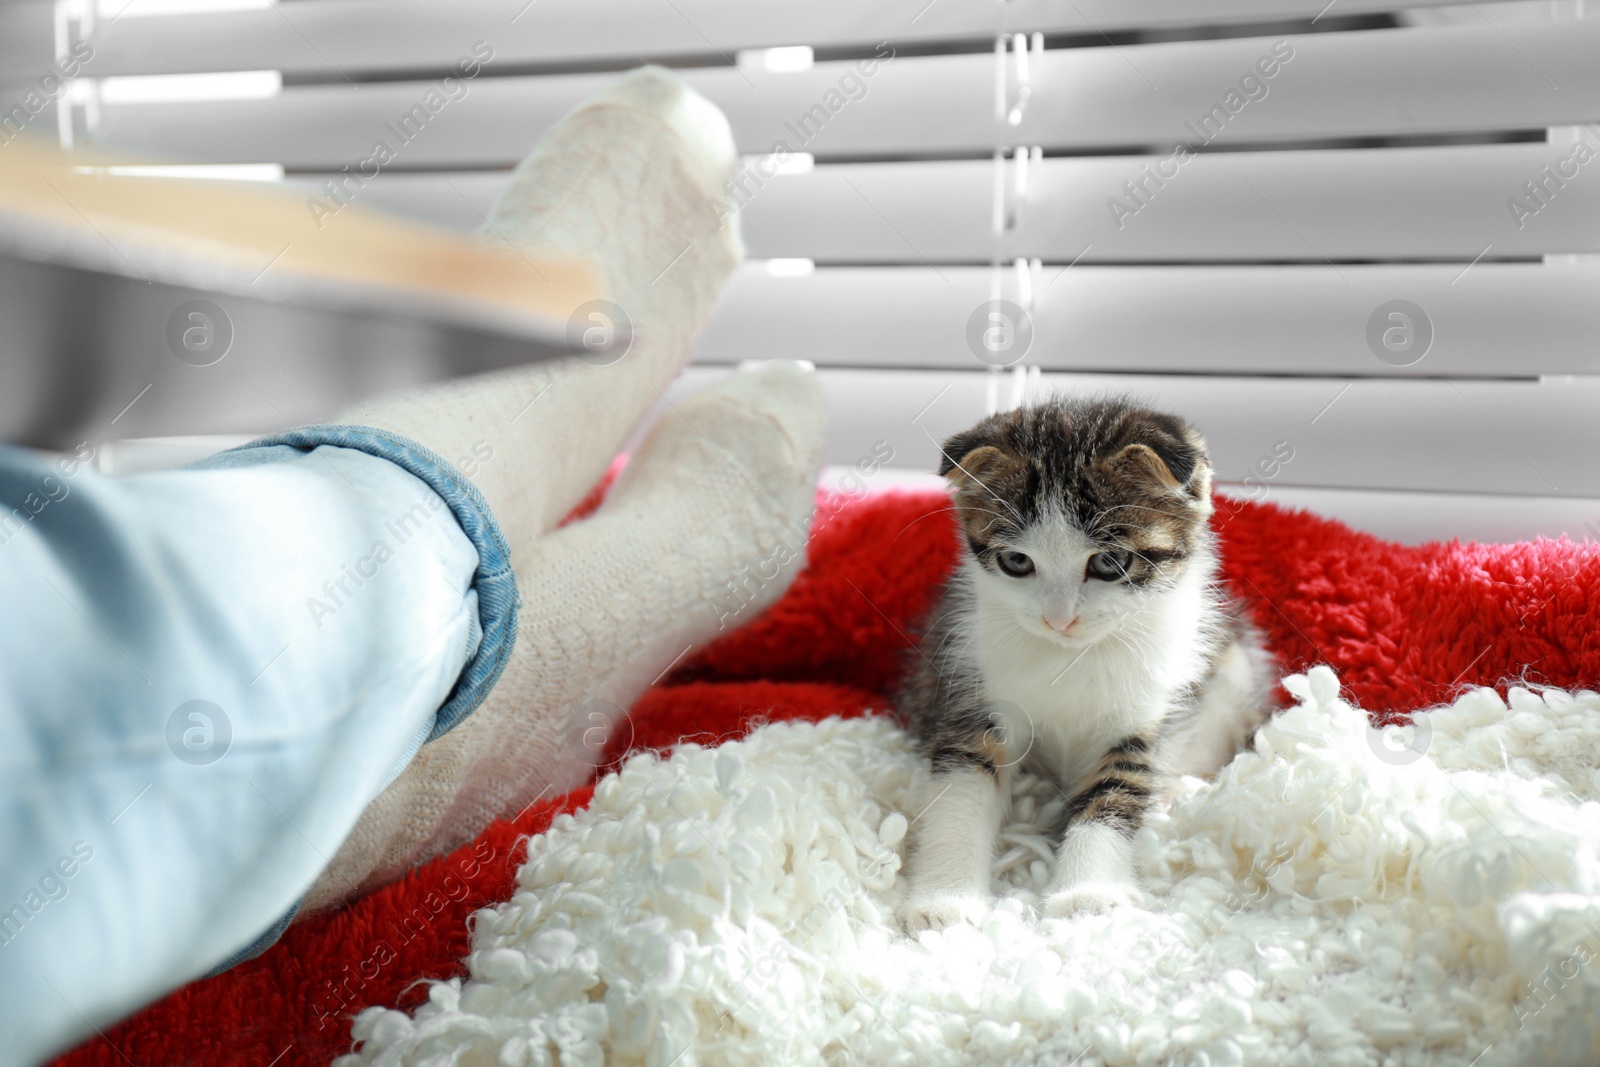 Photo of Adorable little kitten sitting on blanket near owner indoors